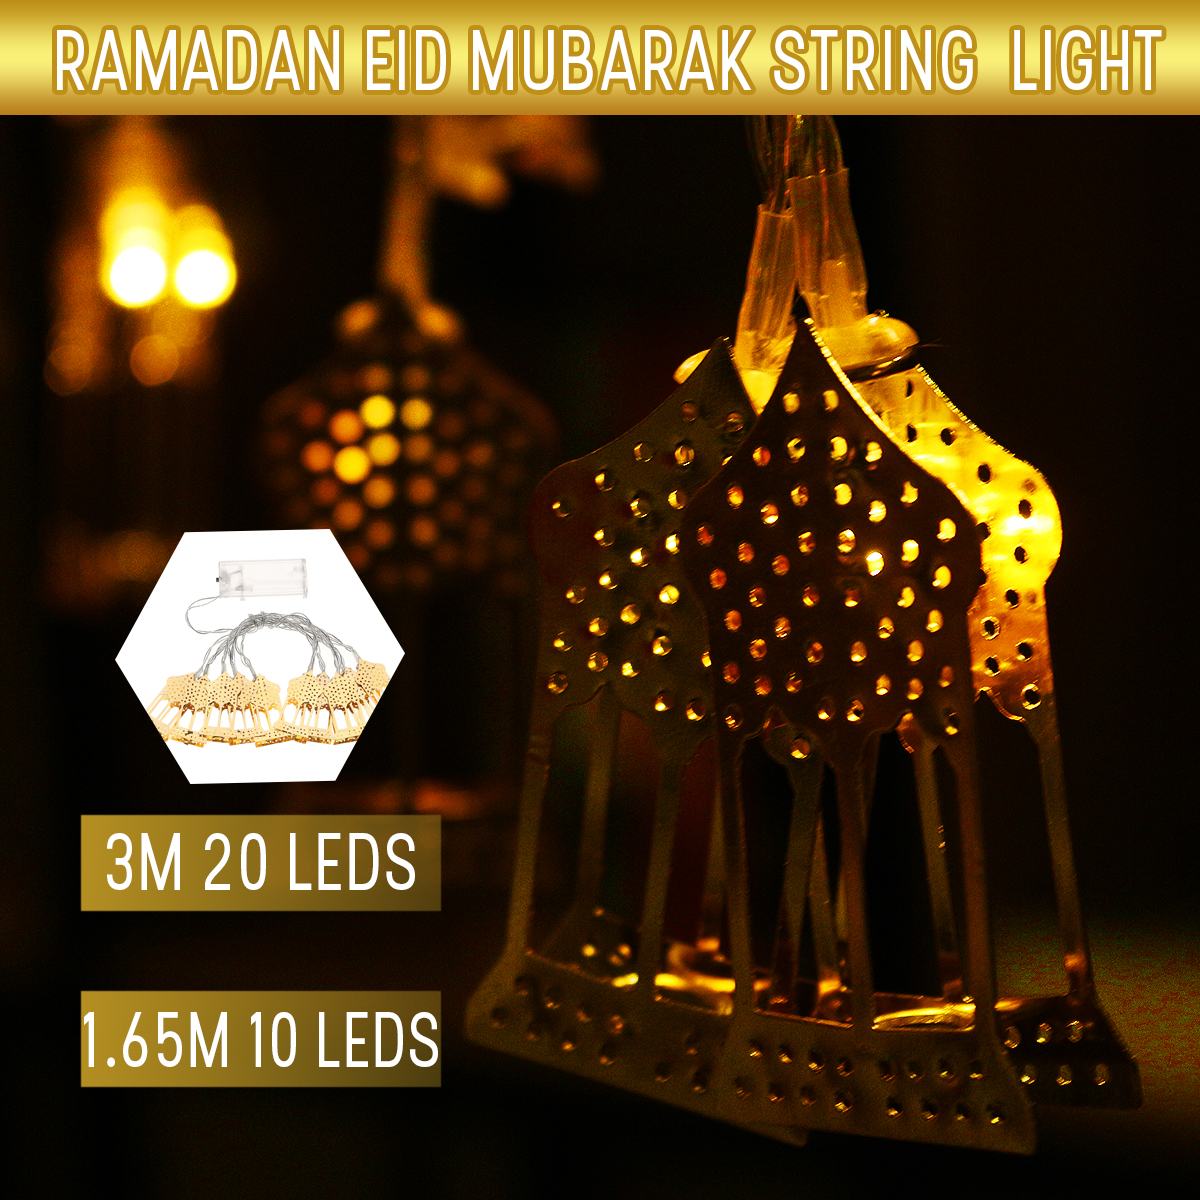 LED-Lamp-String-Golden-Castle-Moon-Light-Eid-Mubarak-Ramadan-Islam-Decor-1670160-1